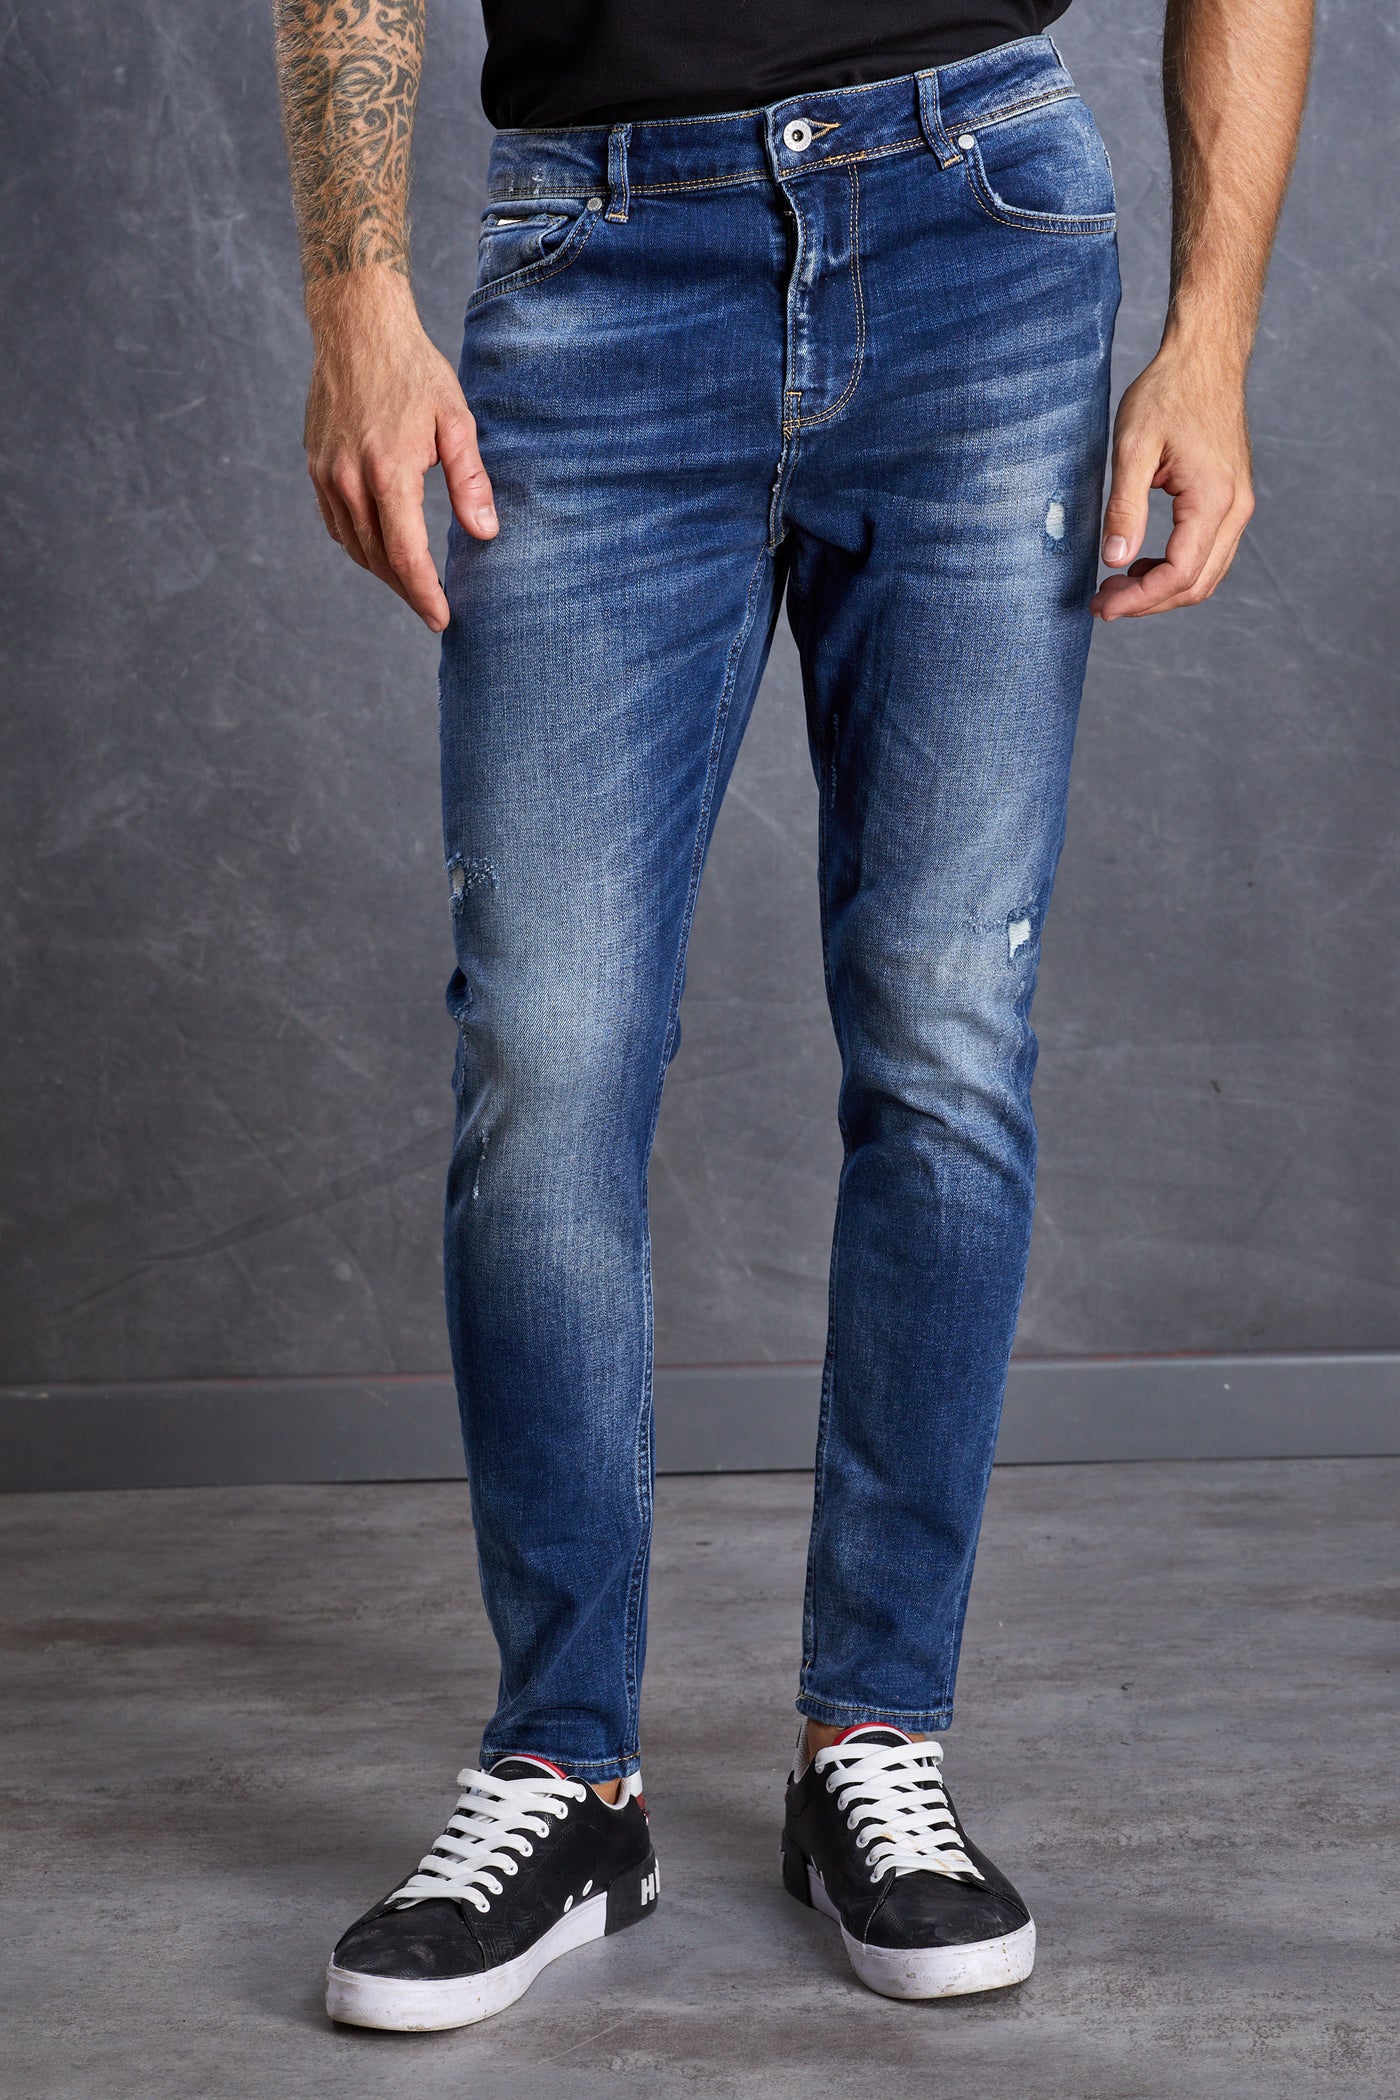 מכנס ג'ינס בצבע כחול